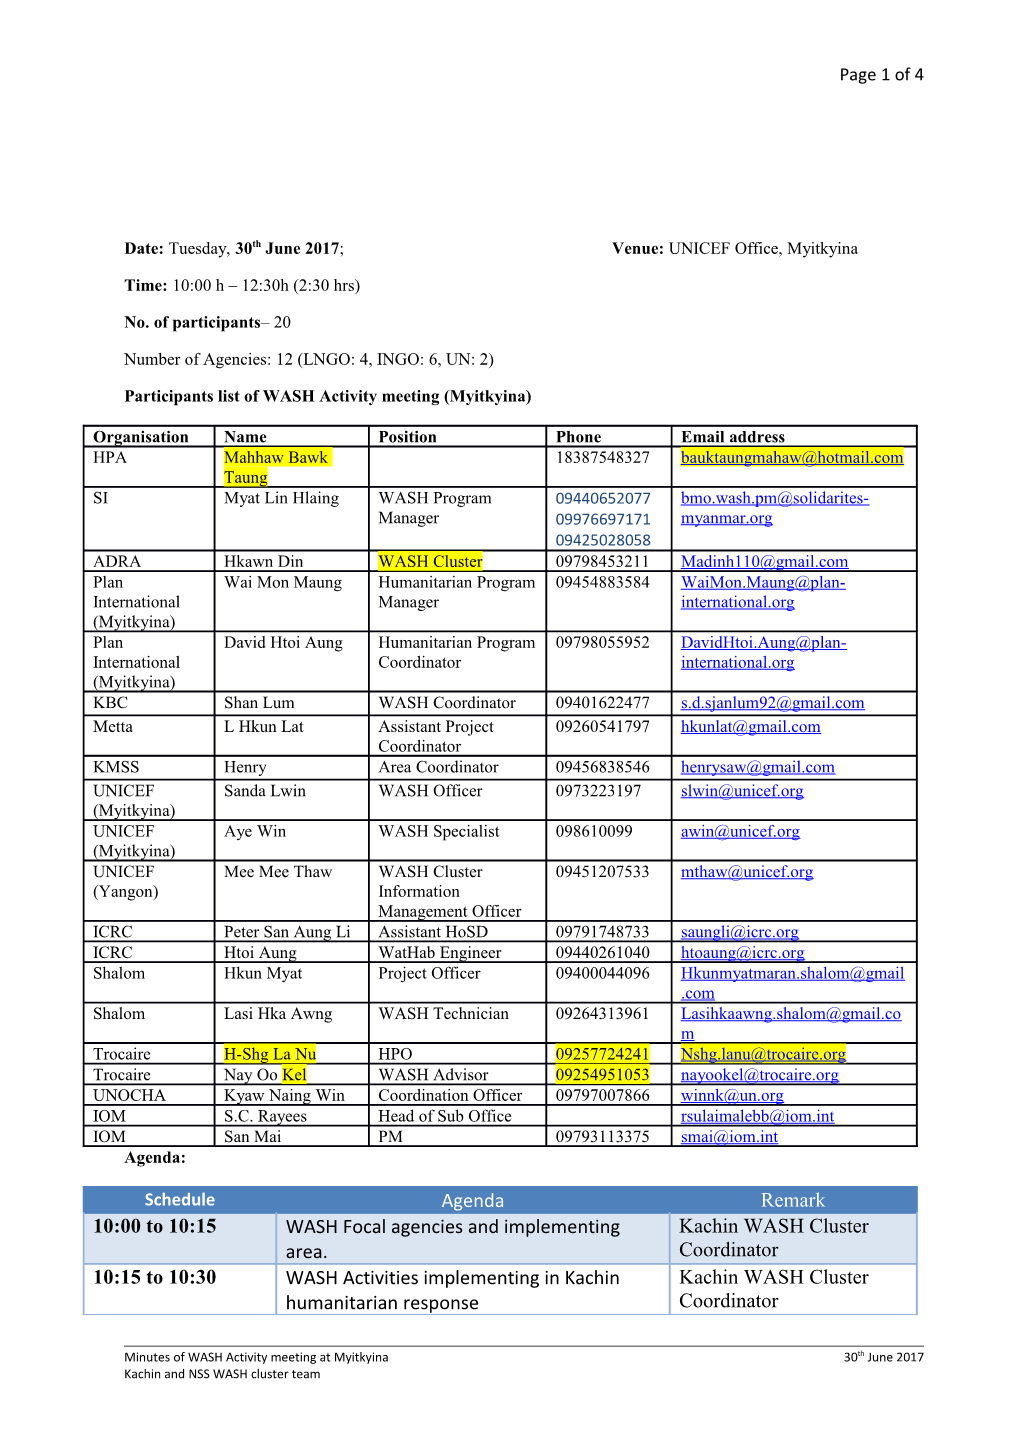 Participants List of WASH Activity Meeting (Myitkyina)